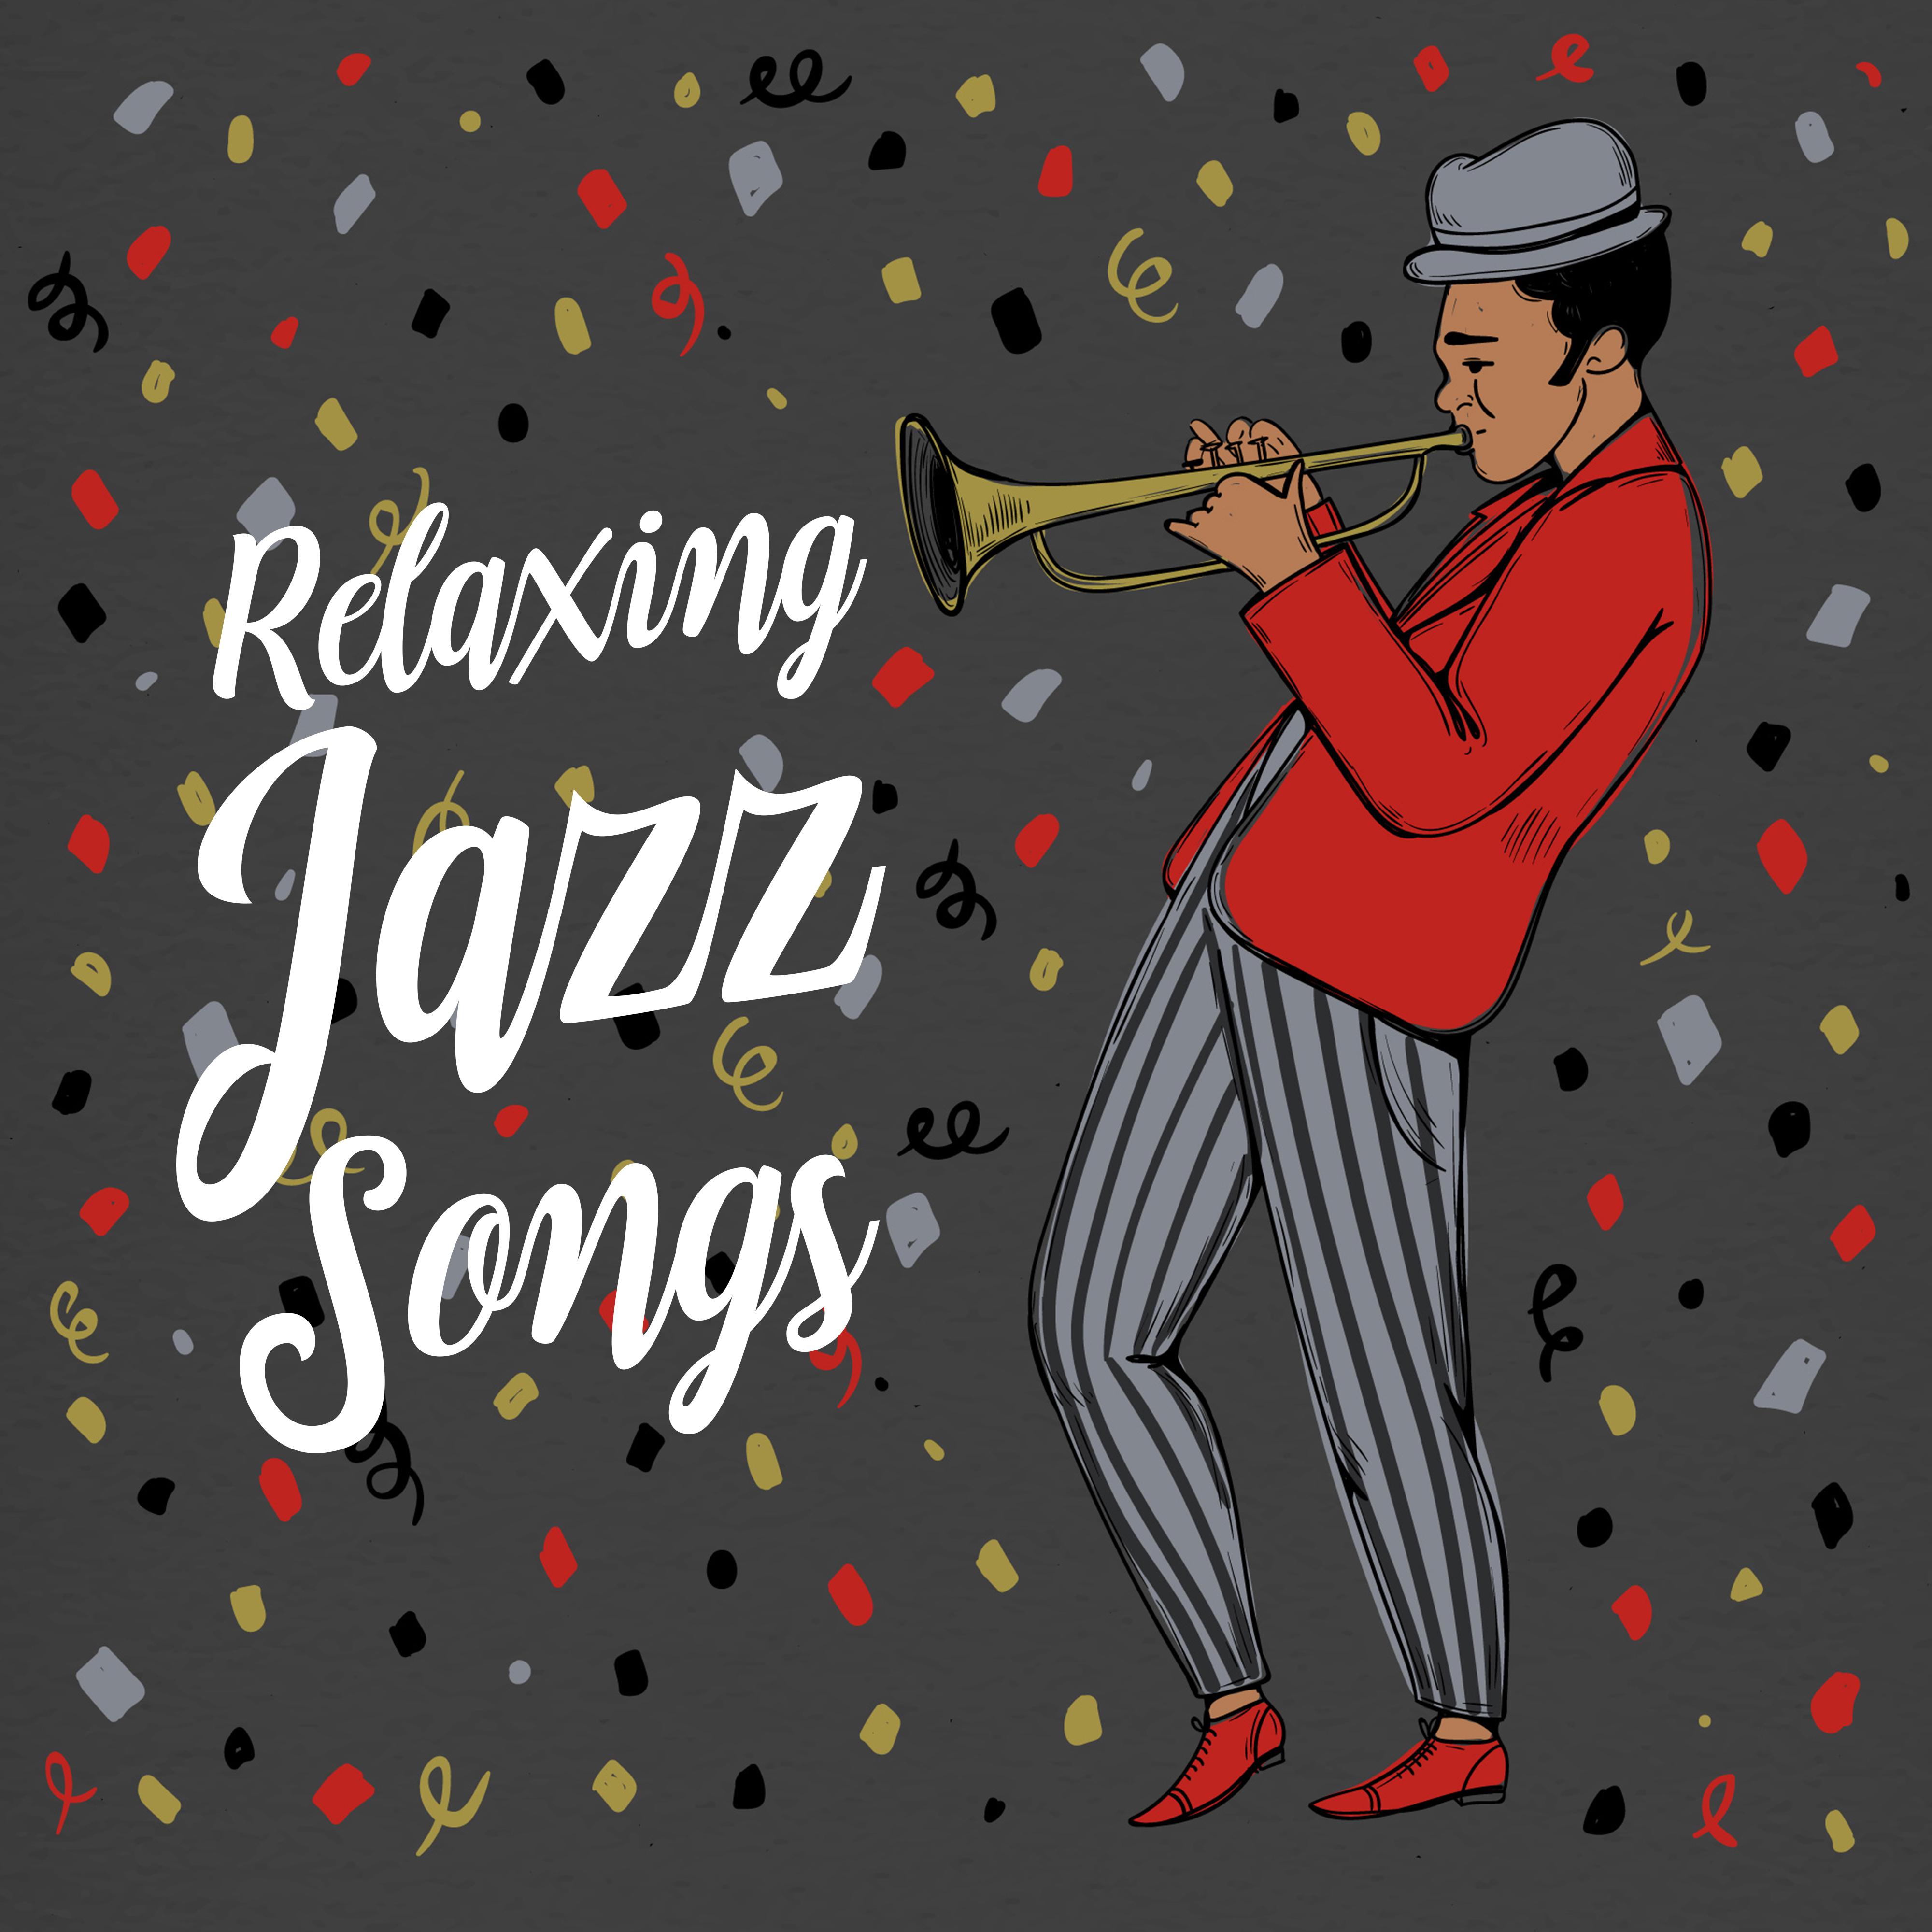 Relaxing Jazz Songs